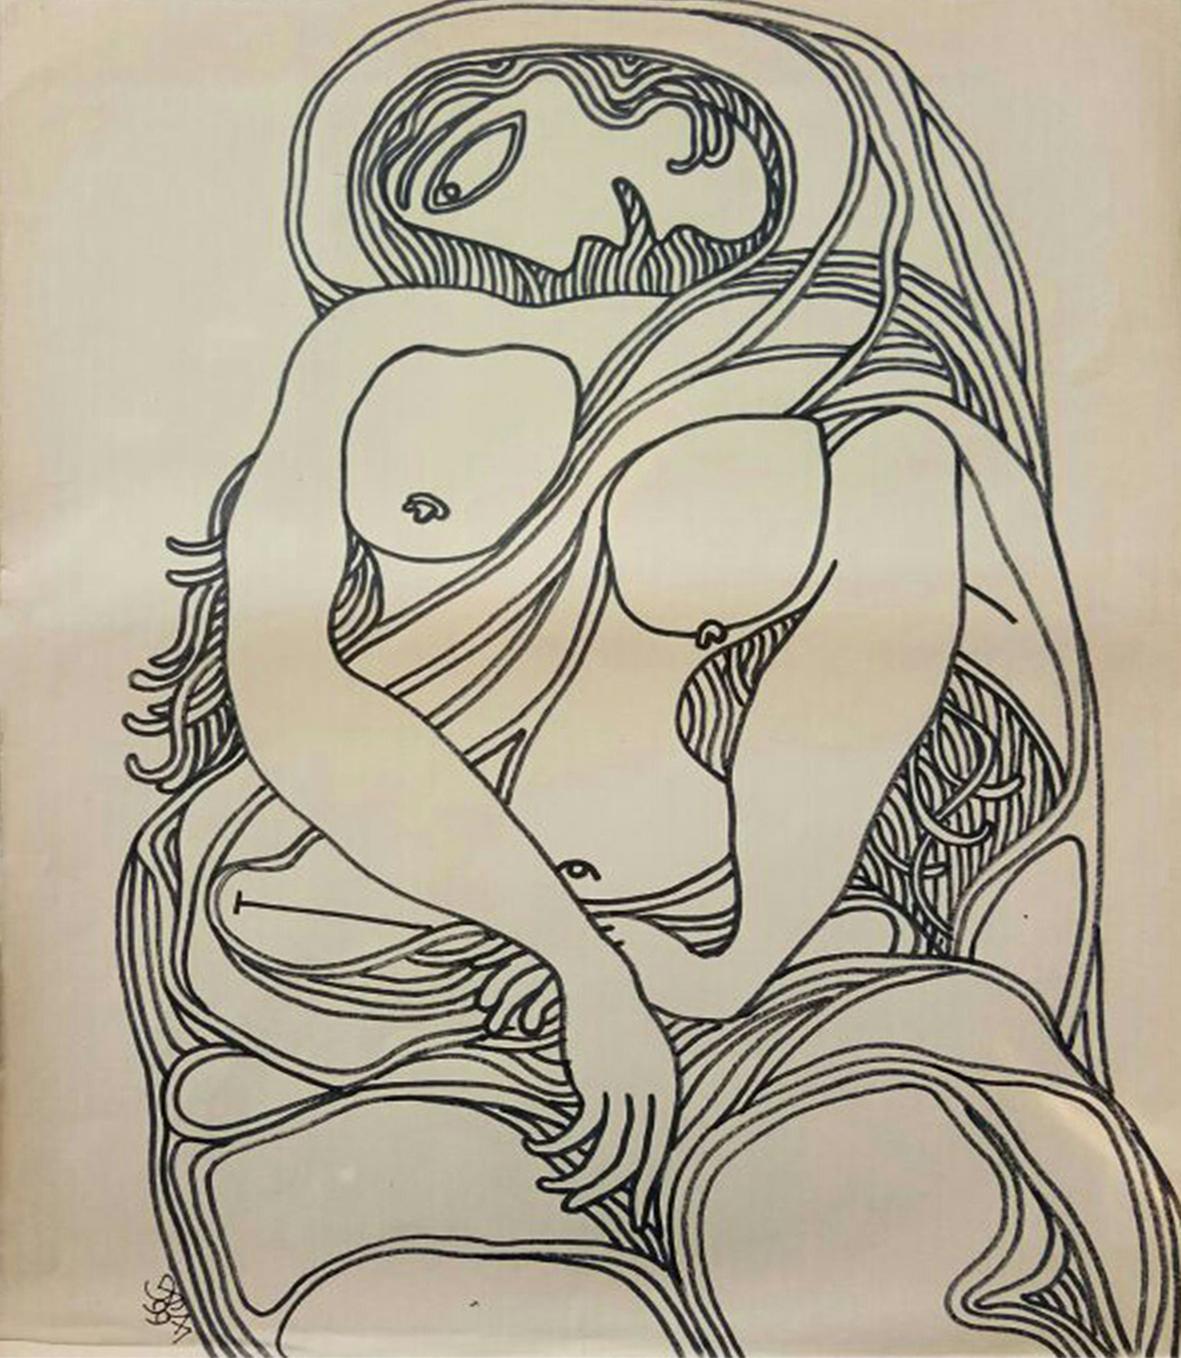 Nude Prakash Karmarkar - Femme nue, dessin, encre, marqueur sur papier de l'artiste indien moderne « En stock »